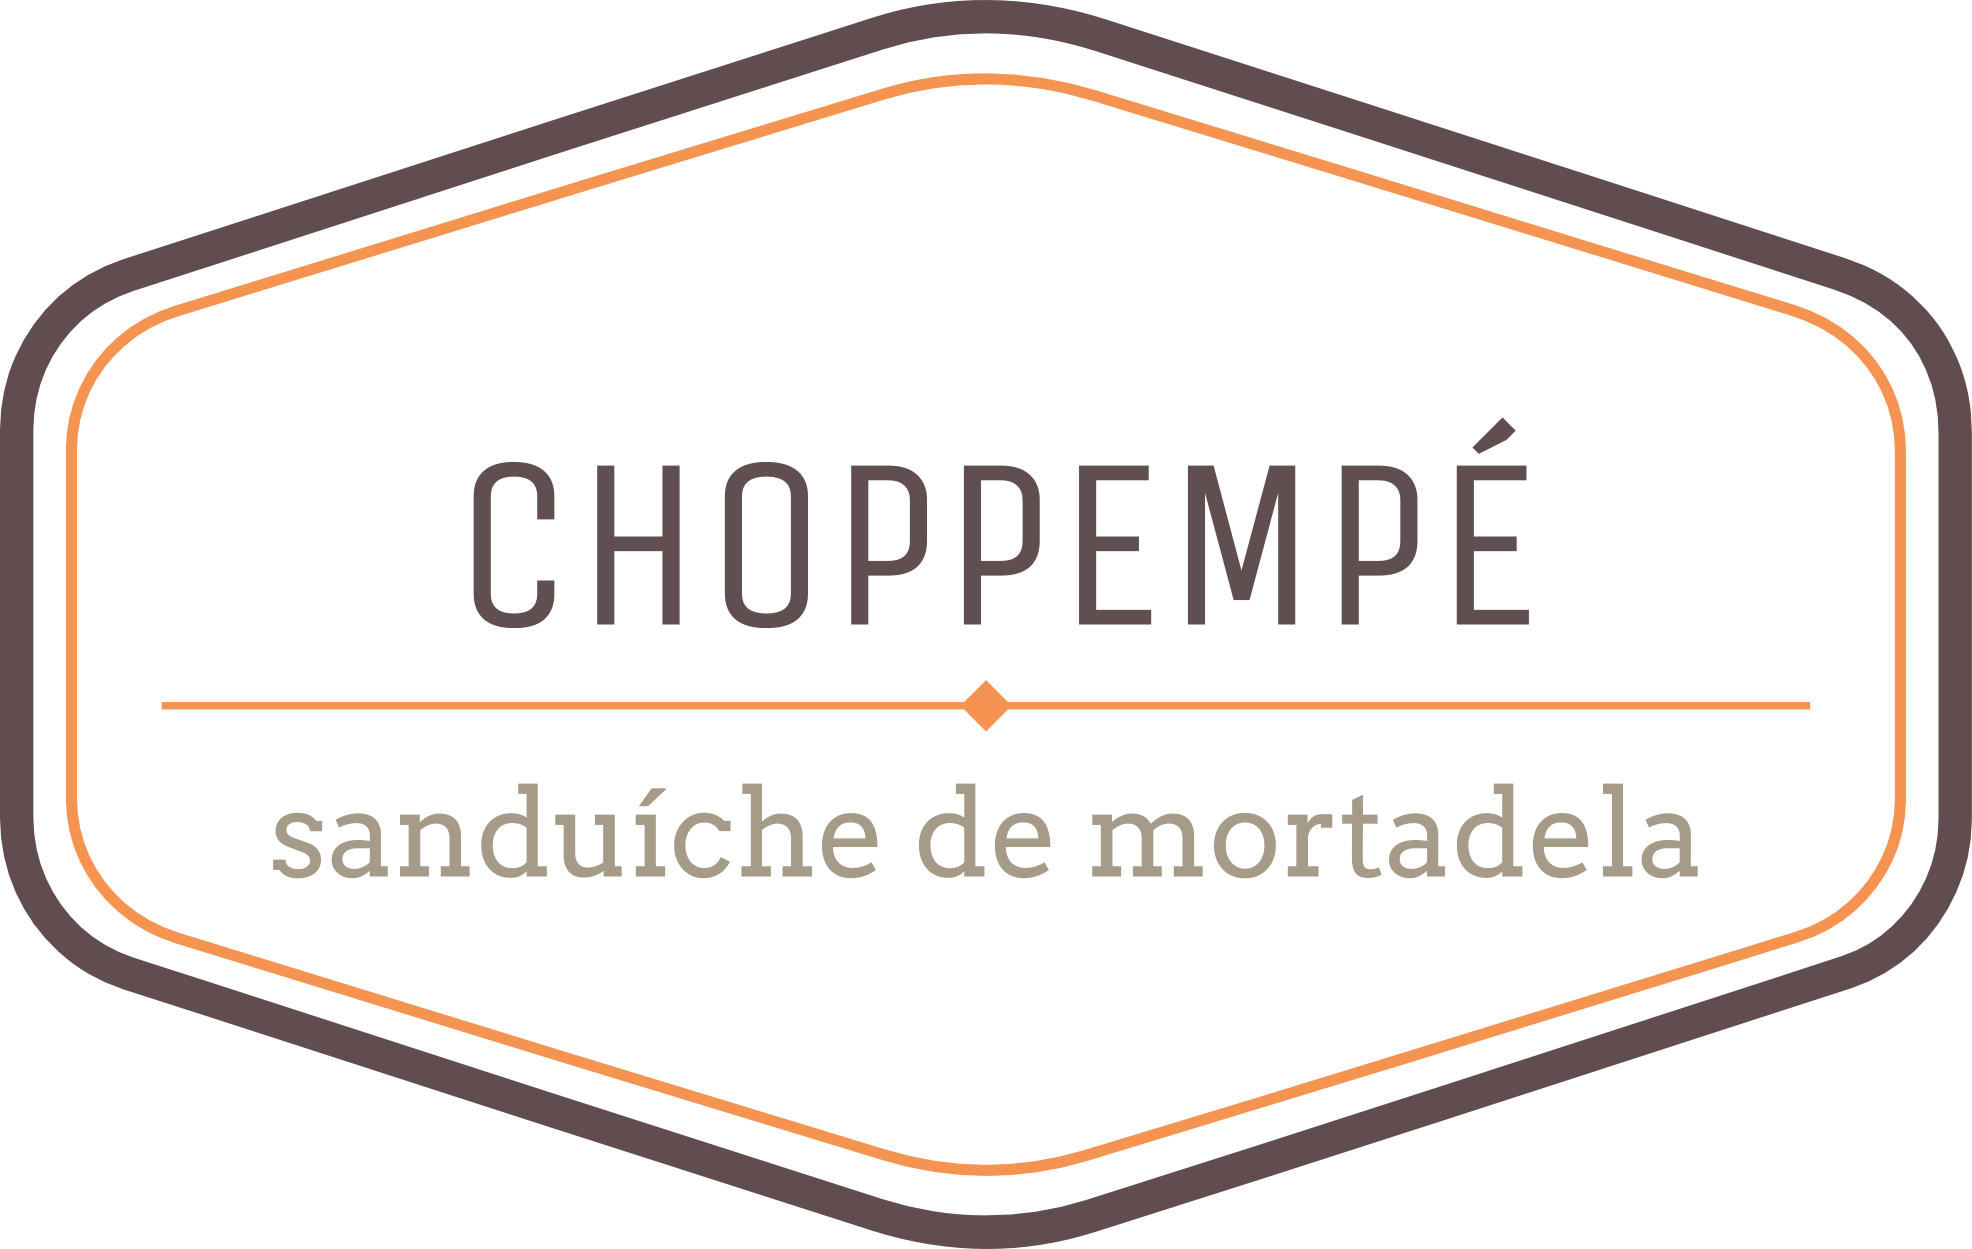 Choppempé